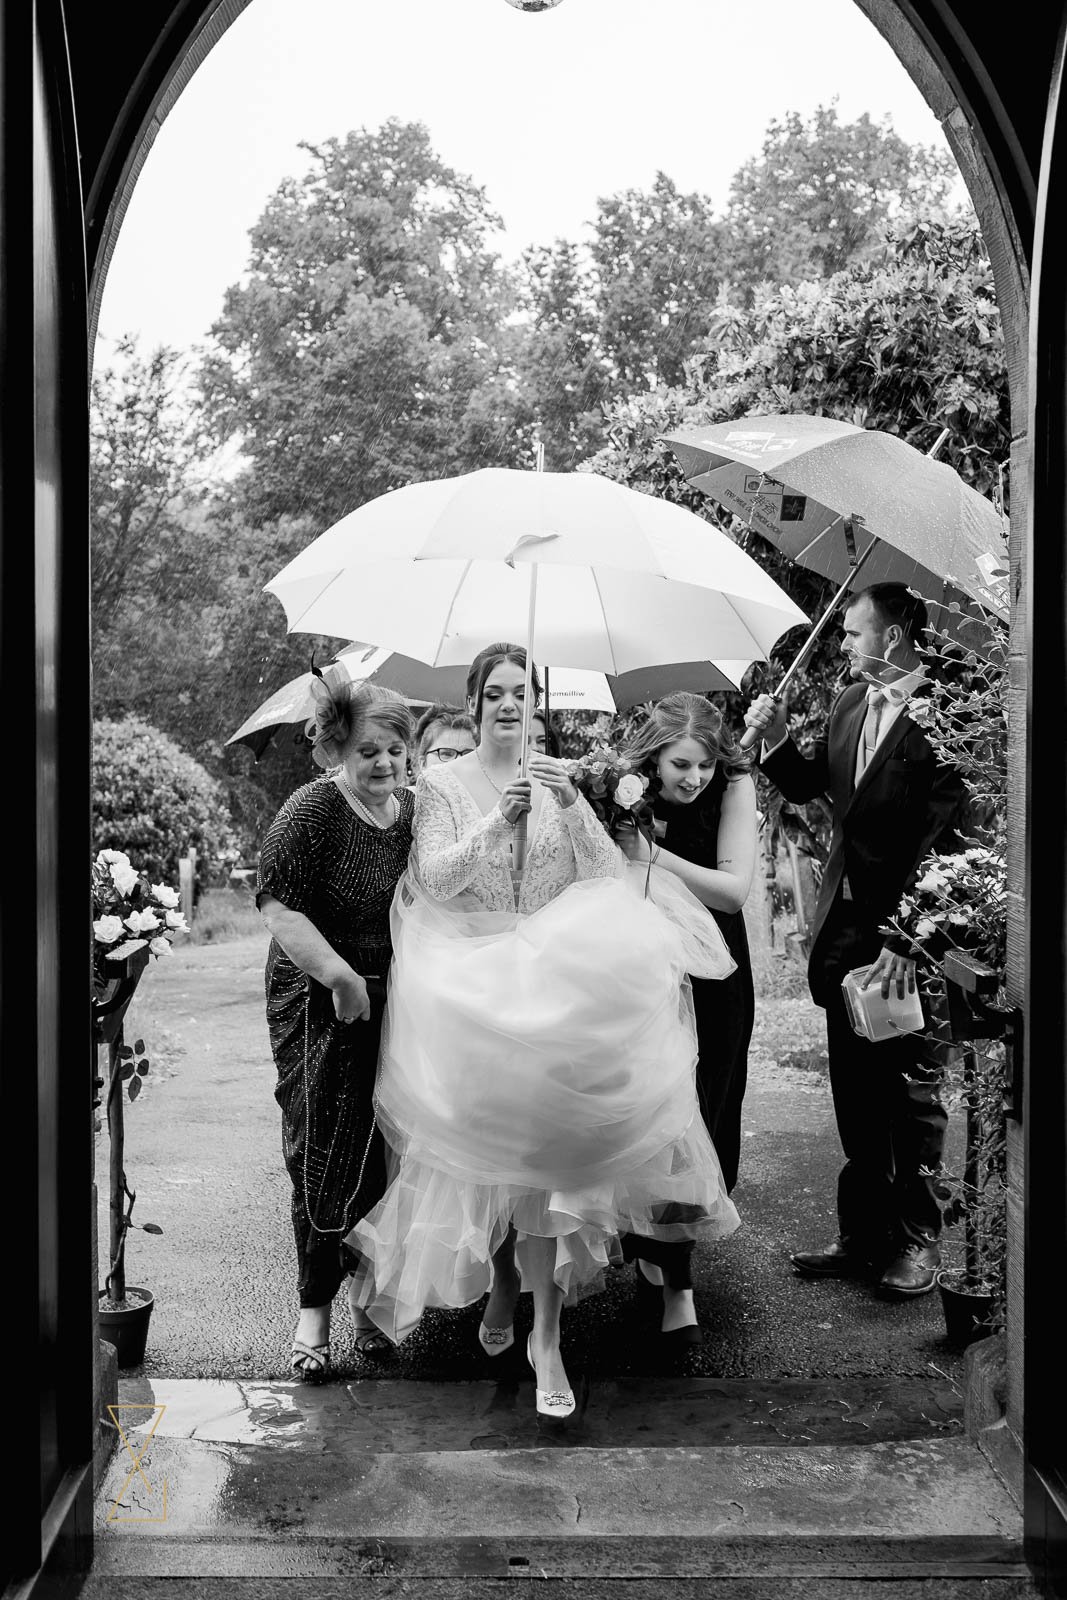 Rain-on-wedding-day-tips-16.jpg